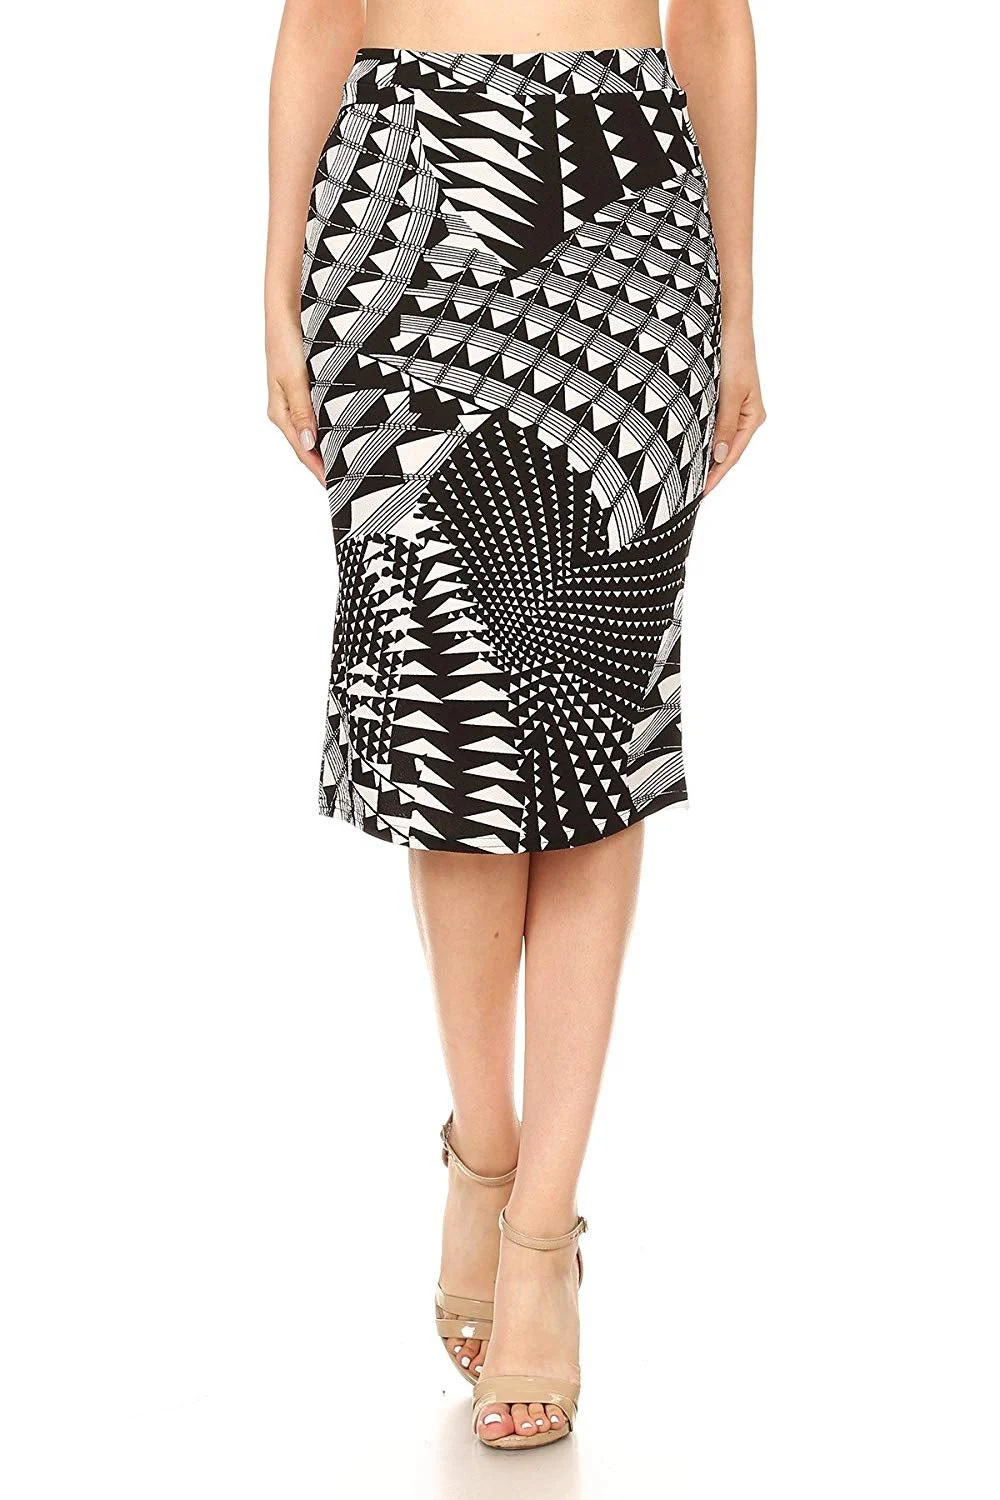 Women's skirt with waist band Trendy Print Stretch Pencil Skirt